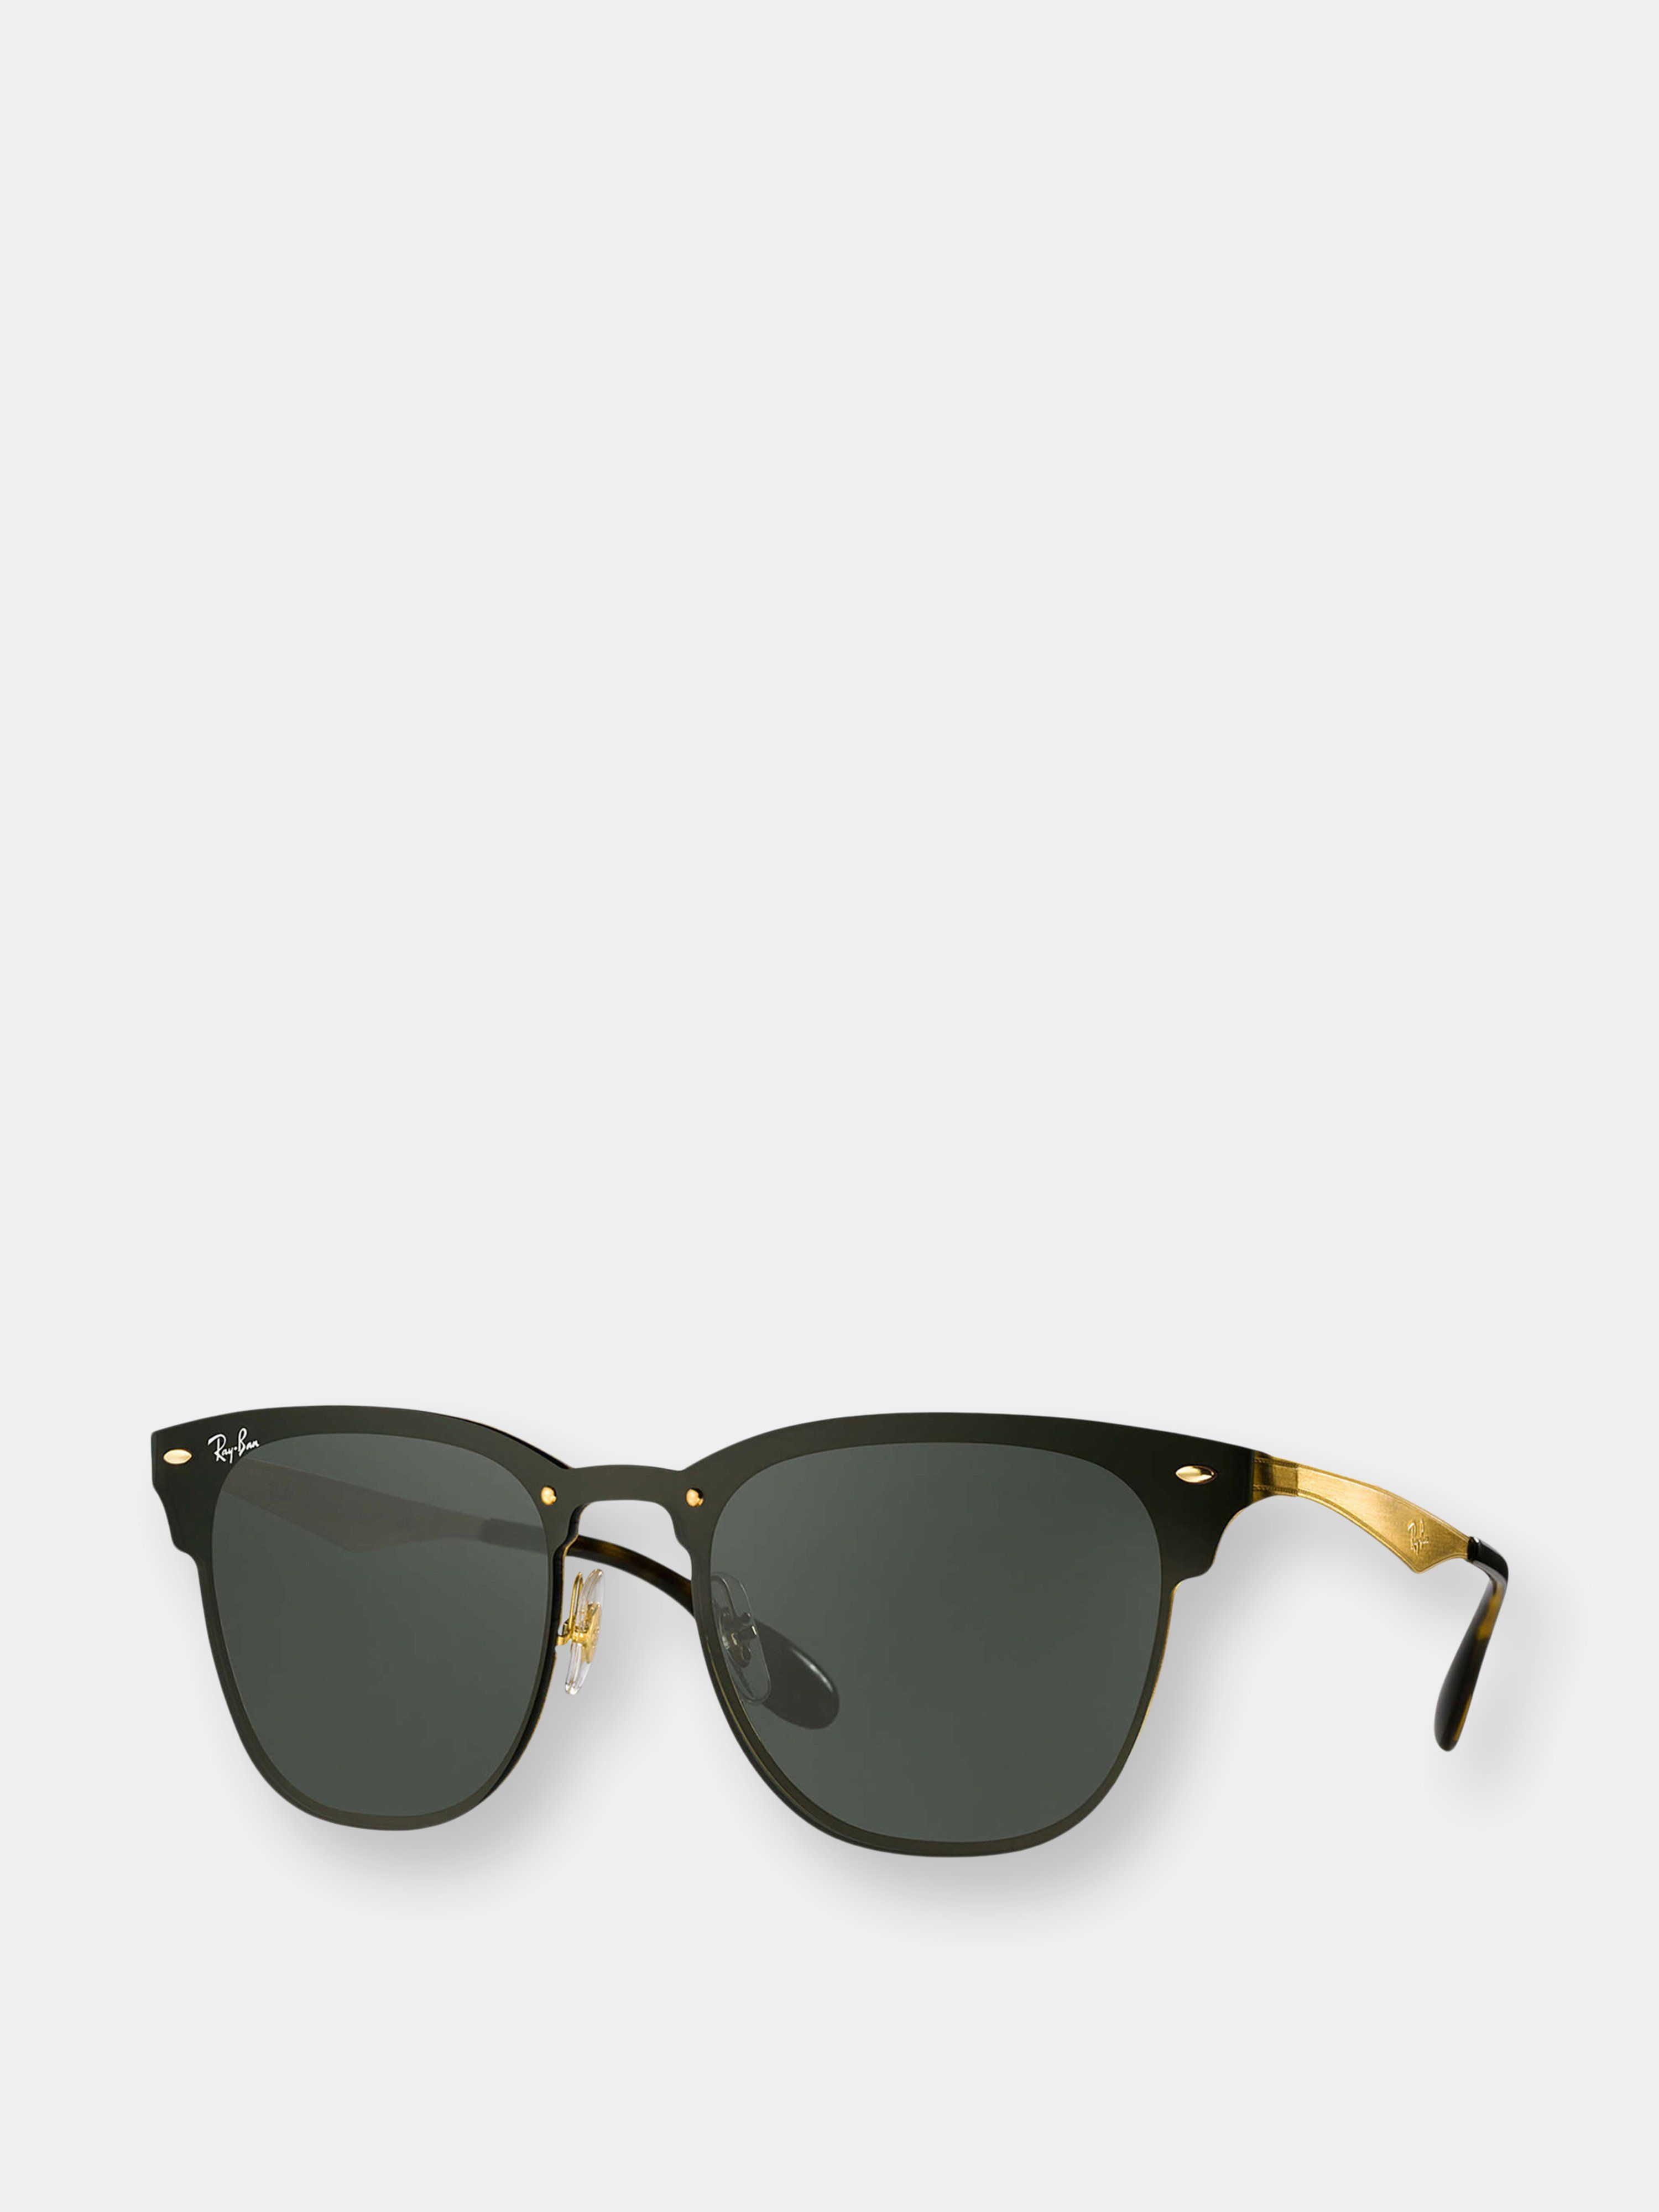 Ray-Ban Blaze Clubmaster Rb3576n-043/71-47 Black Sunglasses | Verishop